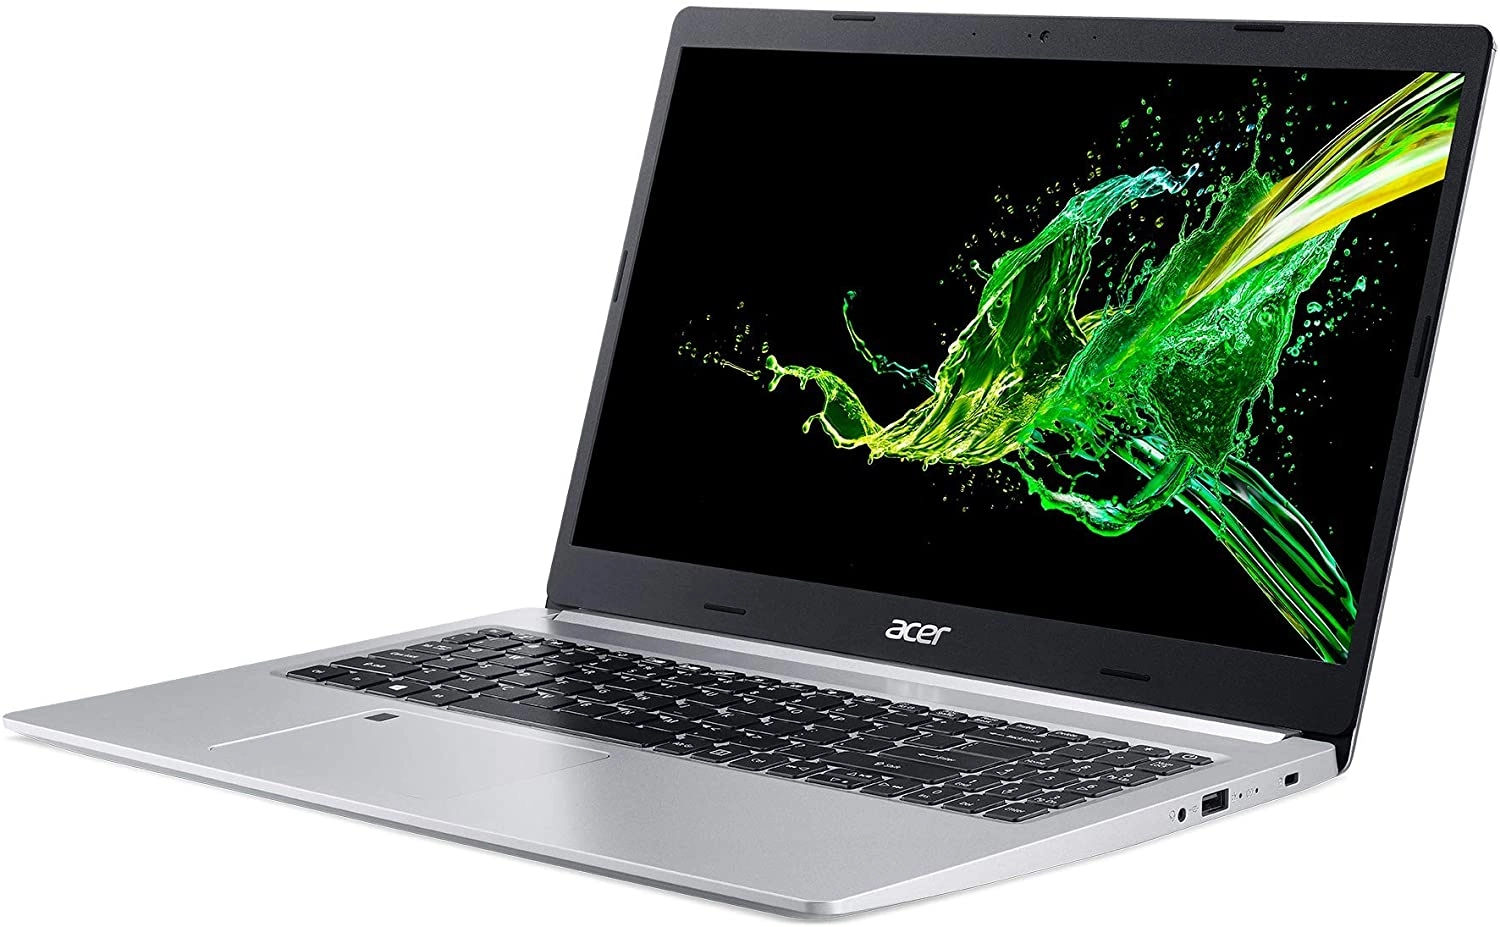 Acer A515-55 laptop image